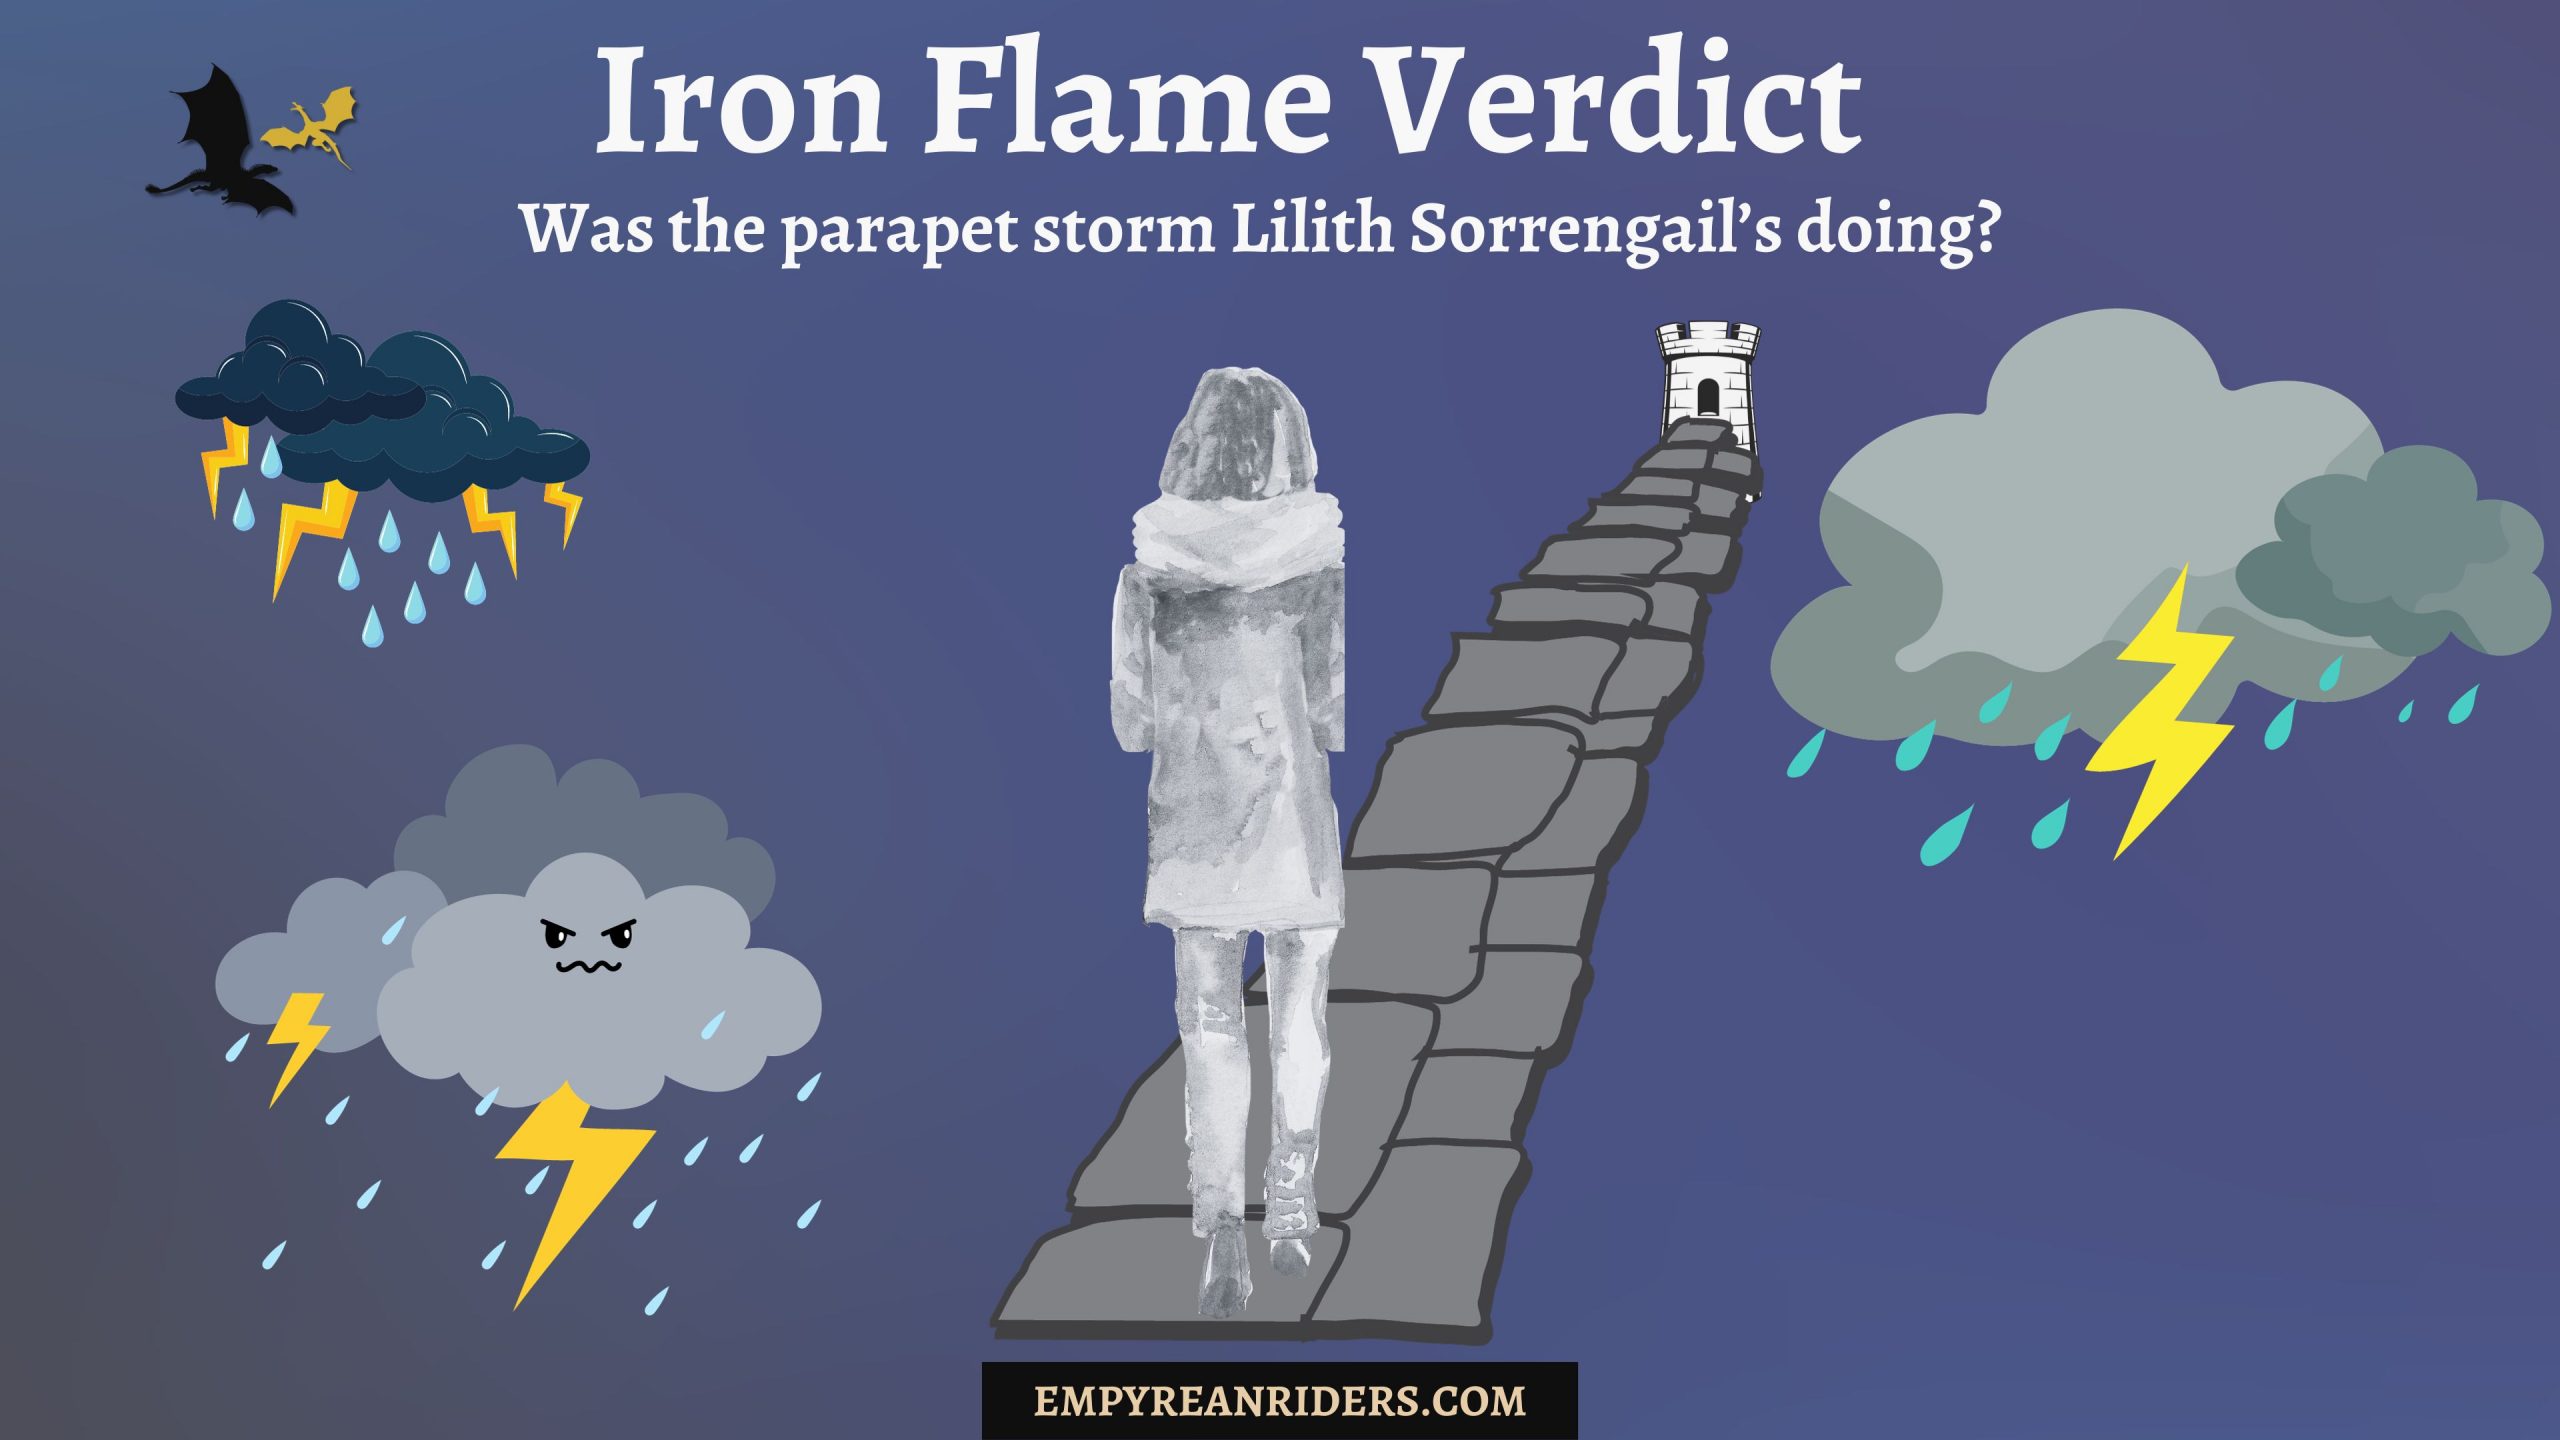 Iron Flame Verdict: Was the parapet storm Lilith Sorrengail’s doing?